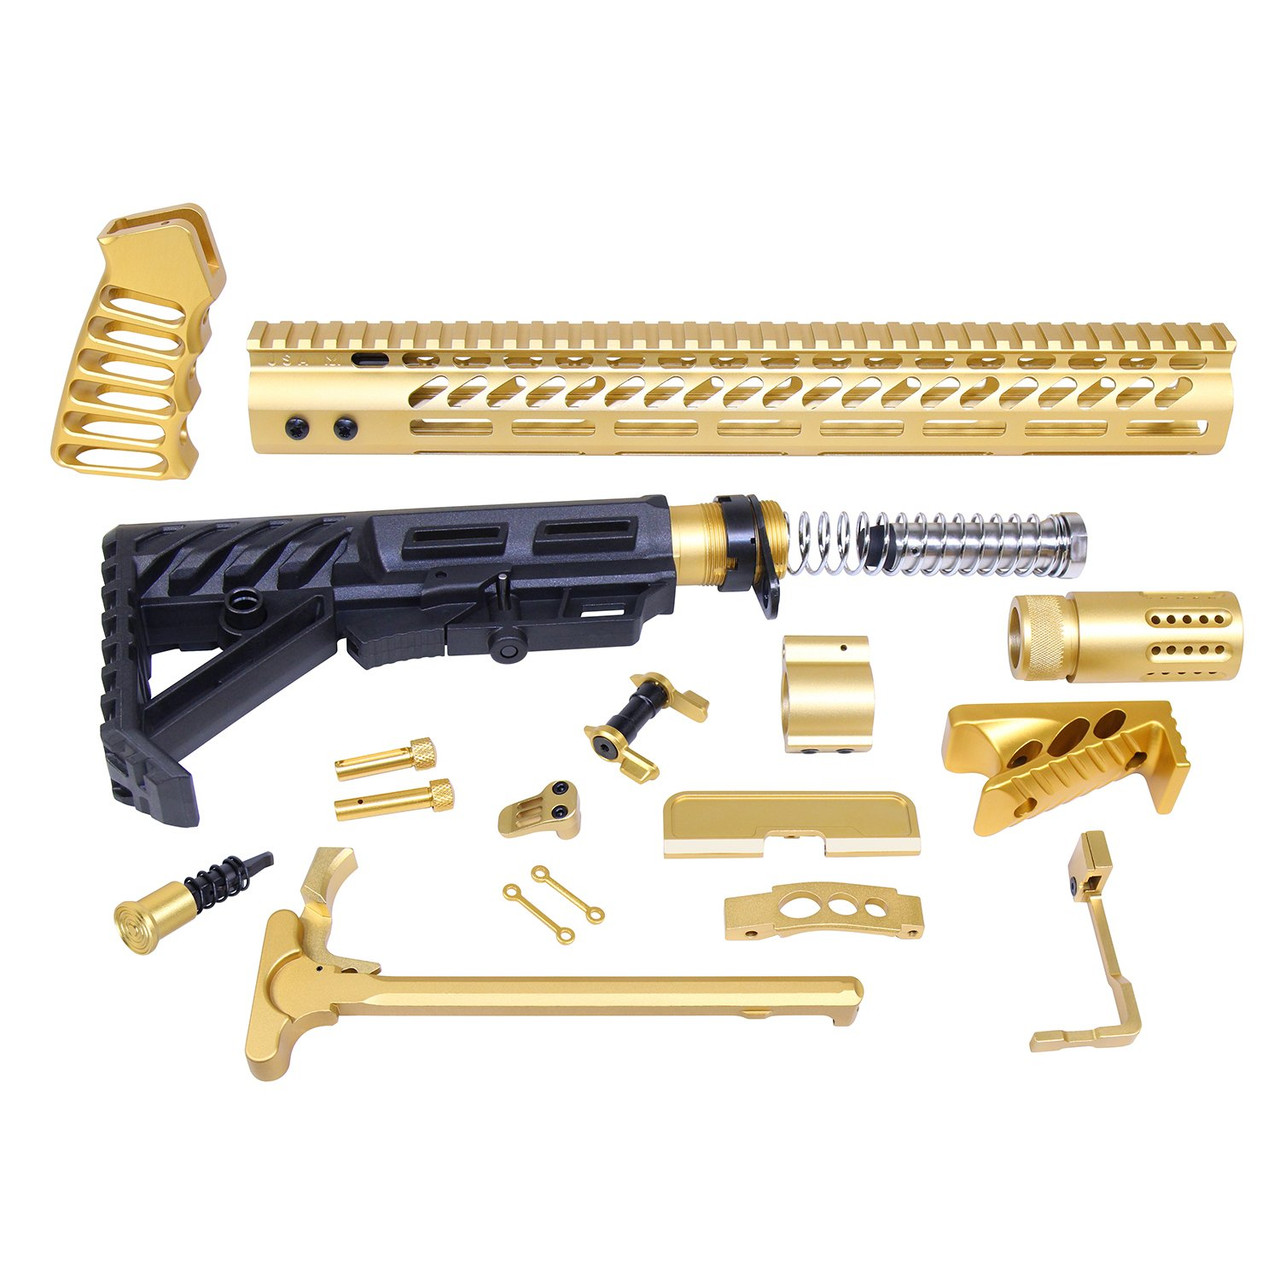 Guntec USA ULT-RK-GOLD AR-15 Ultimate Rifle Kit (Anodized Gold)